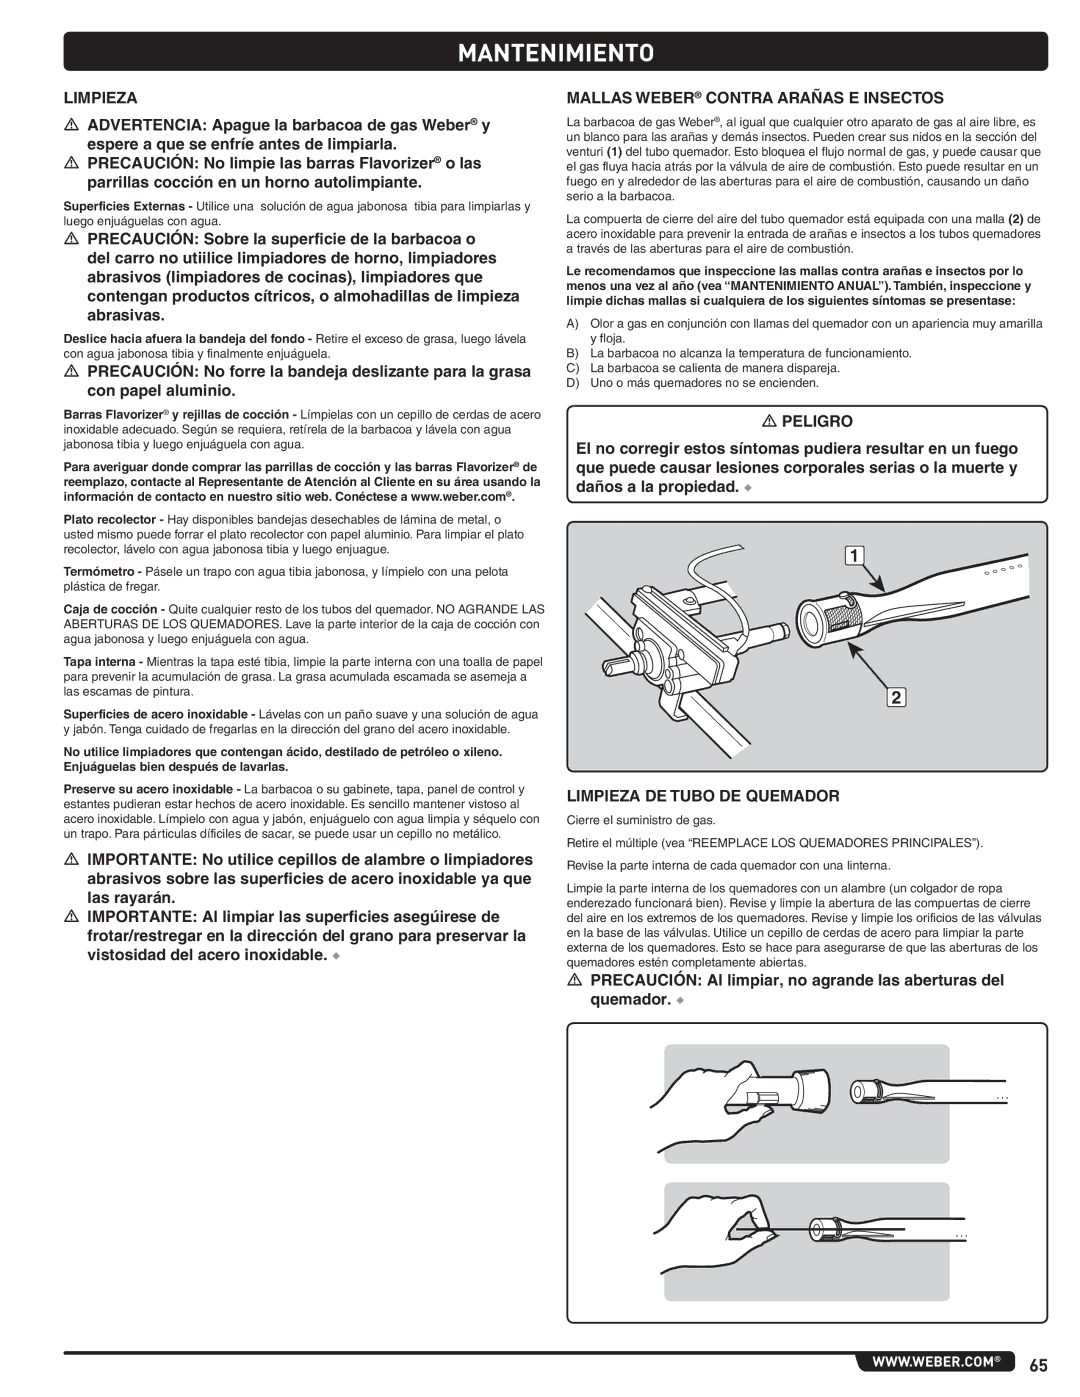 Weber 660- LP manual Mantenimiento, Mallas Weber Contra Arañas E Insectos, Limpieza DE Tubo DE Quemador 